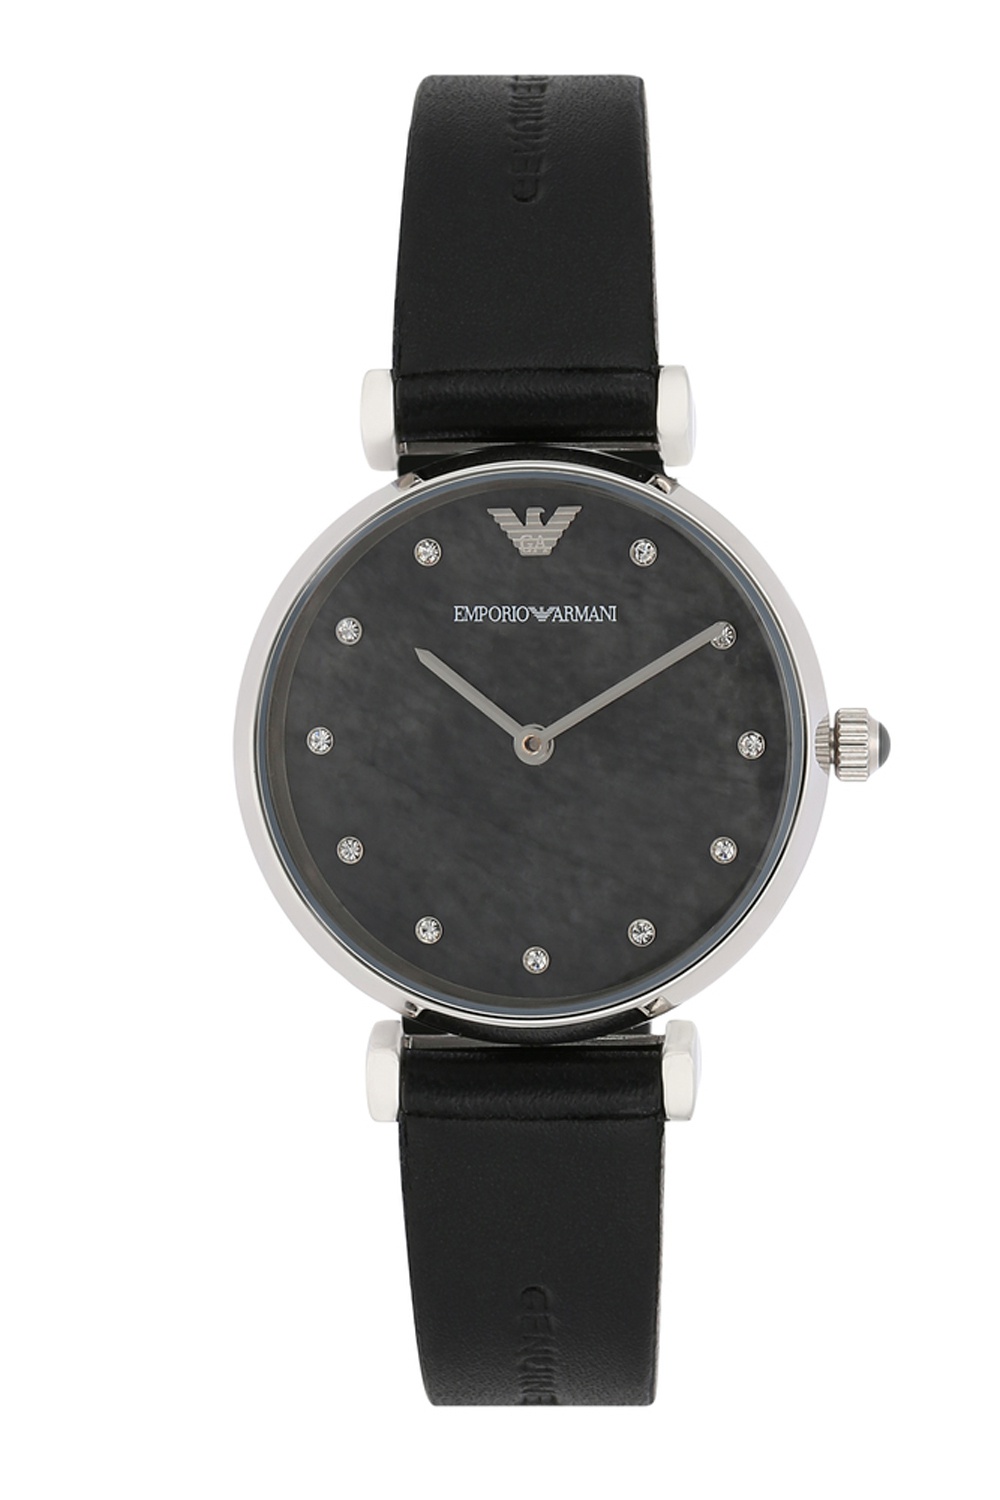 Emporio Armani Women's Gianni T-B Leather Watch 